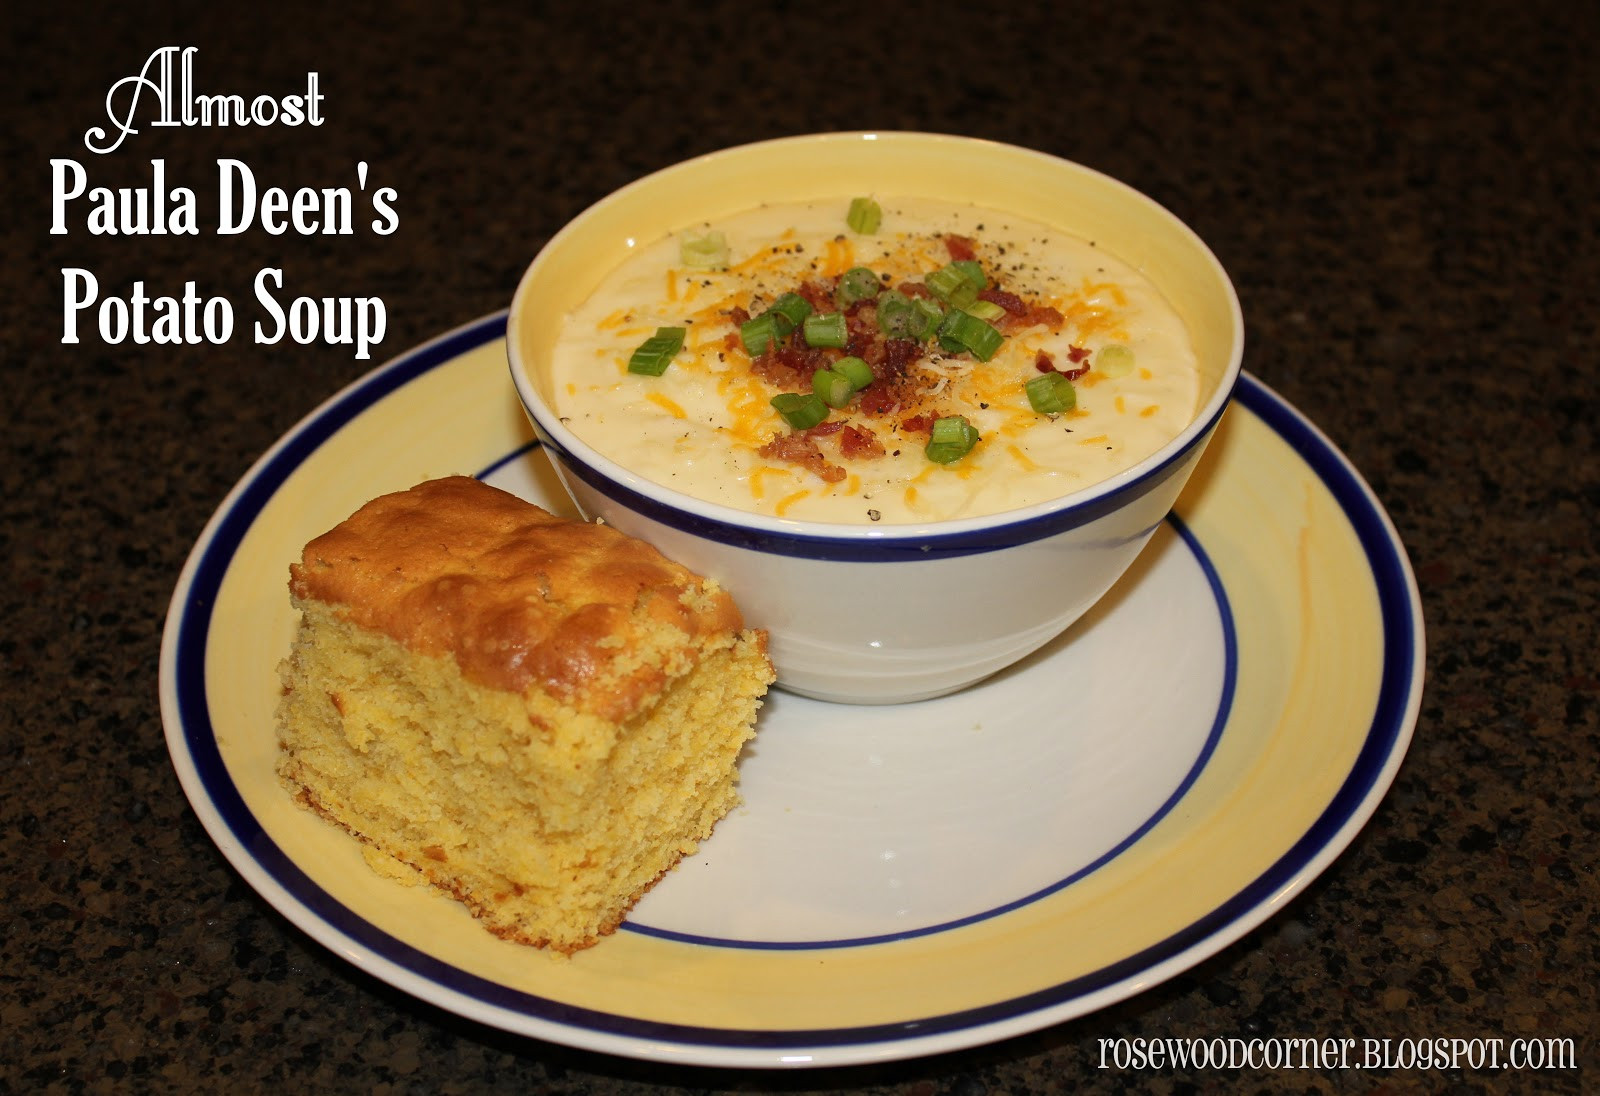 Crockpot Potato Soup Paula Deen
 Rosewood Corner Recipes We Love "Almost" Paula Deen s